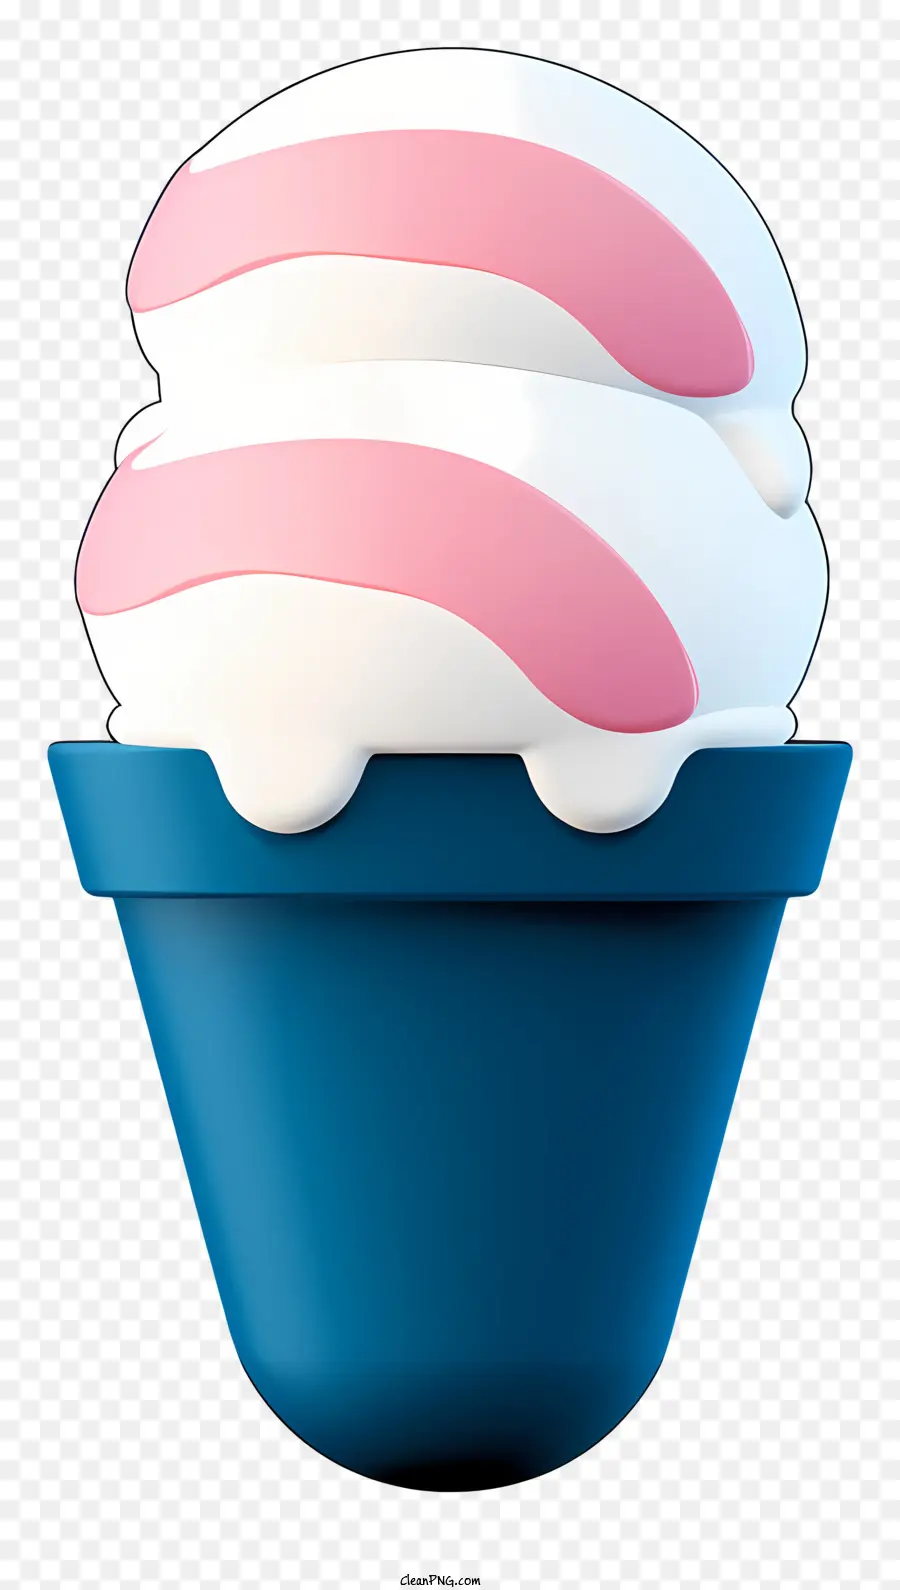 pink ice cream cone whipped cream striped spoon blue plate round ice cream cone